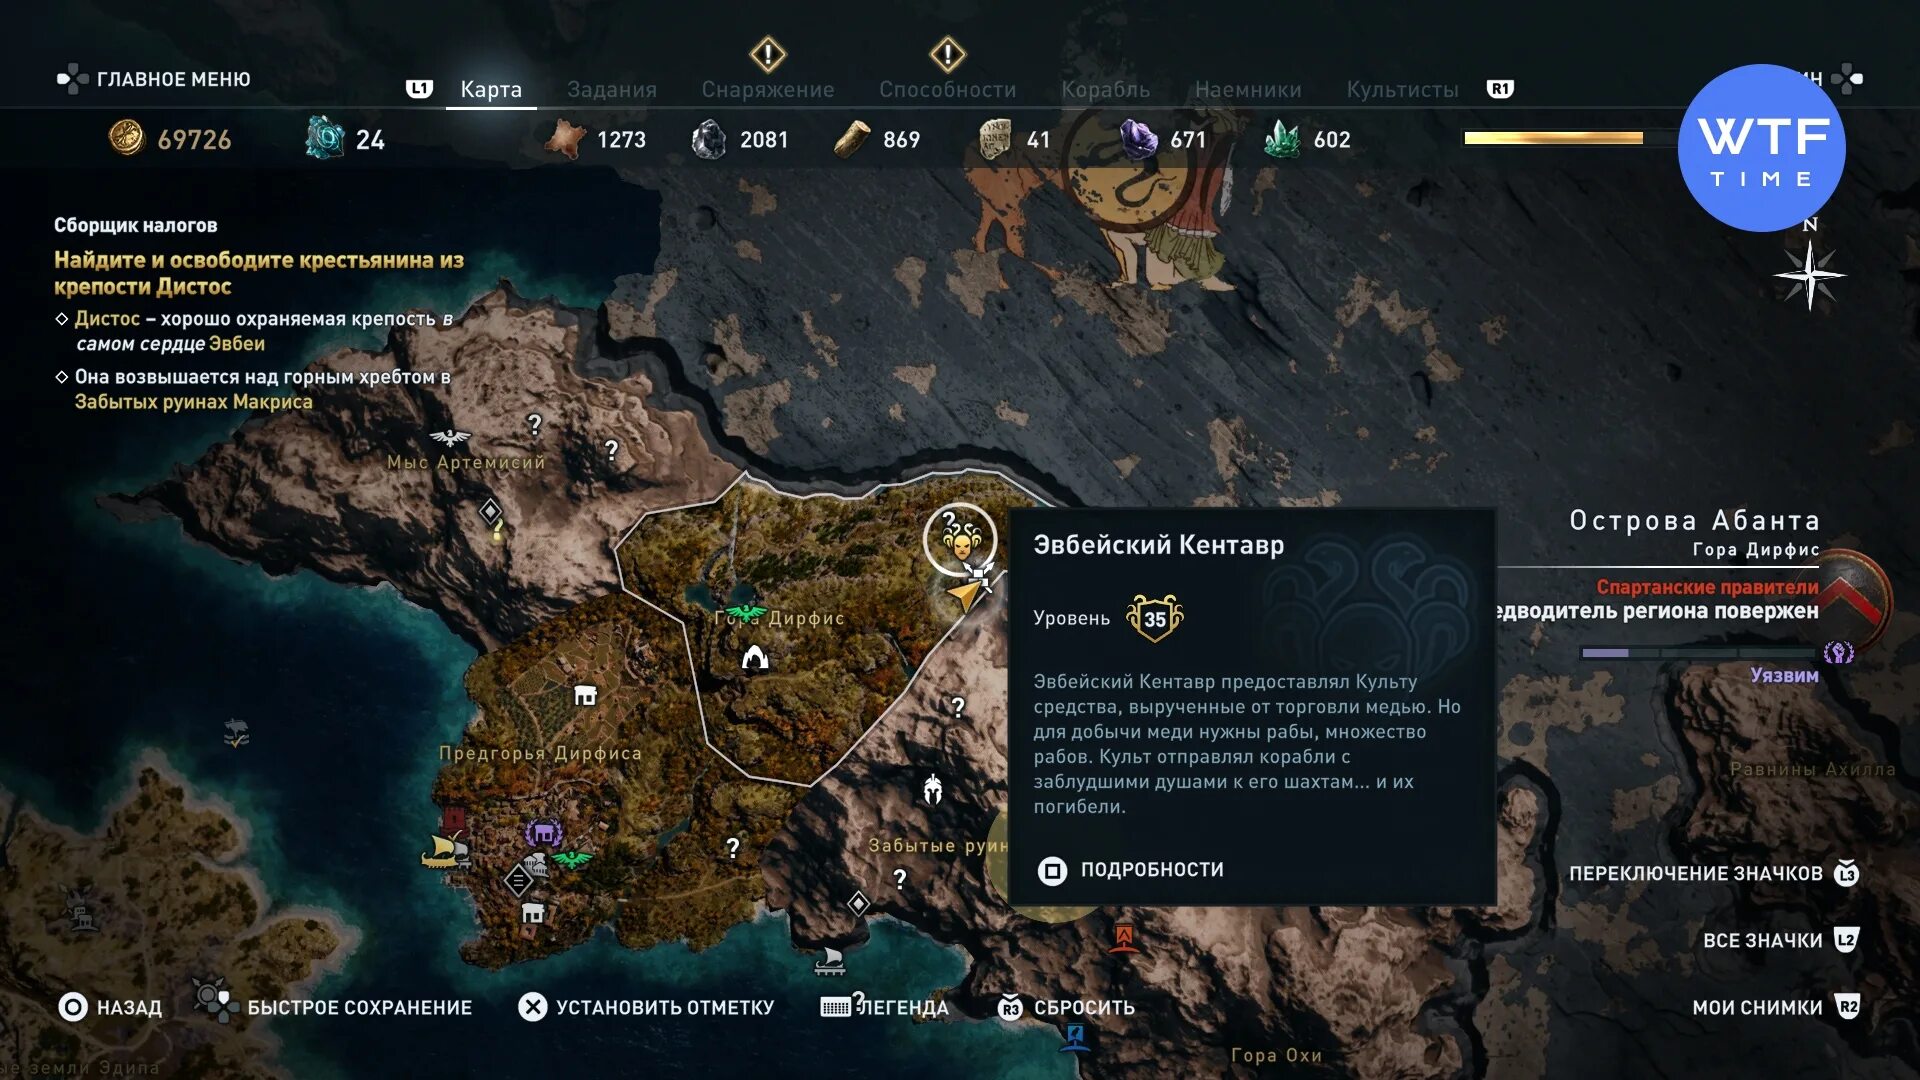 Шахта в Аттике Assassins Creed Odyssey культист. Ассасин Крид Одиссея шахта в Аттике на карте. Шахта в Аттике Assassins Creed Odyssey на карте. Ассасин Крид Одиссея культист владеет шахтой в Аттике.